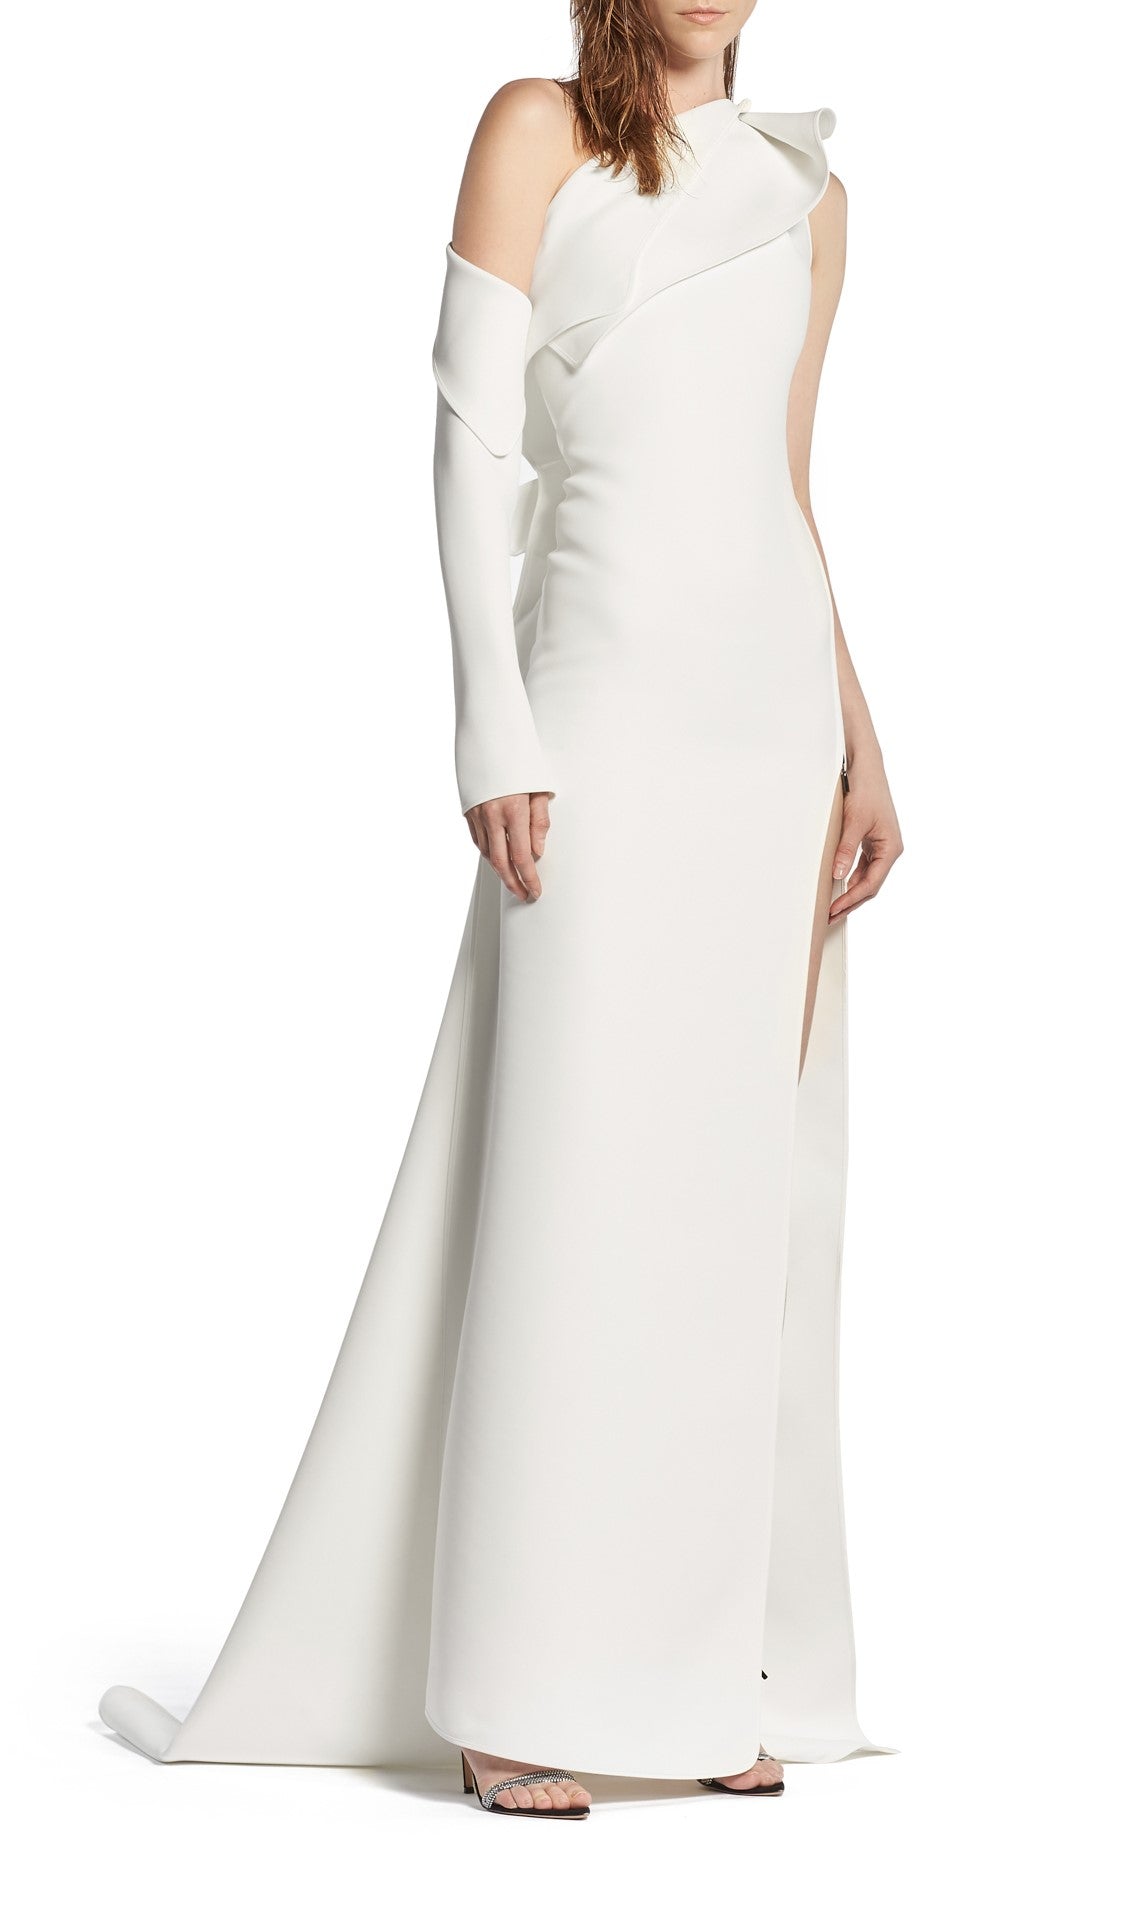 Toni Maticevski Archer gown. Asymmetrical neckline gown with thigh high slit. 